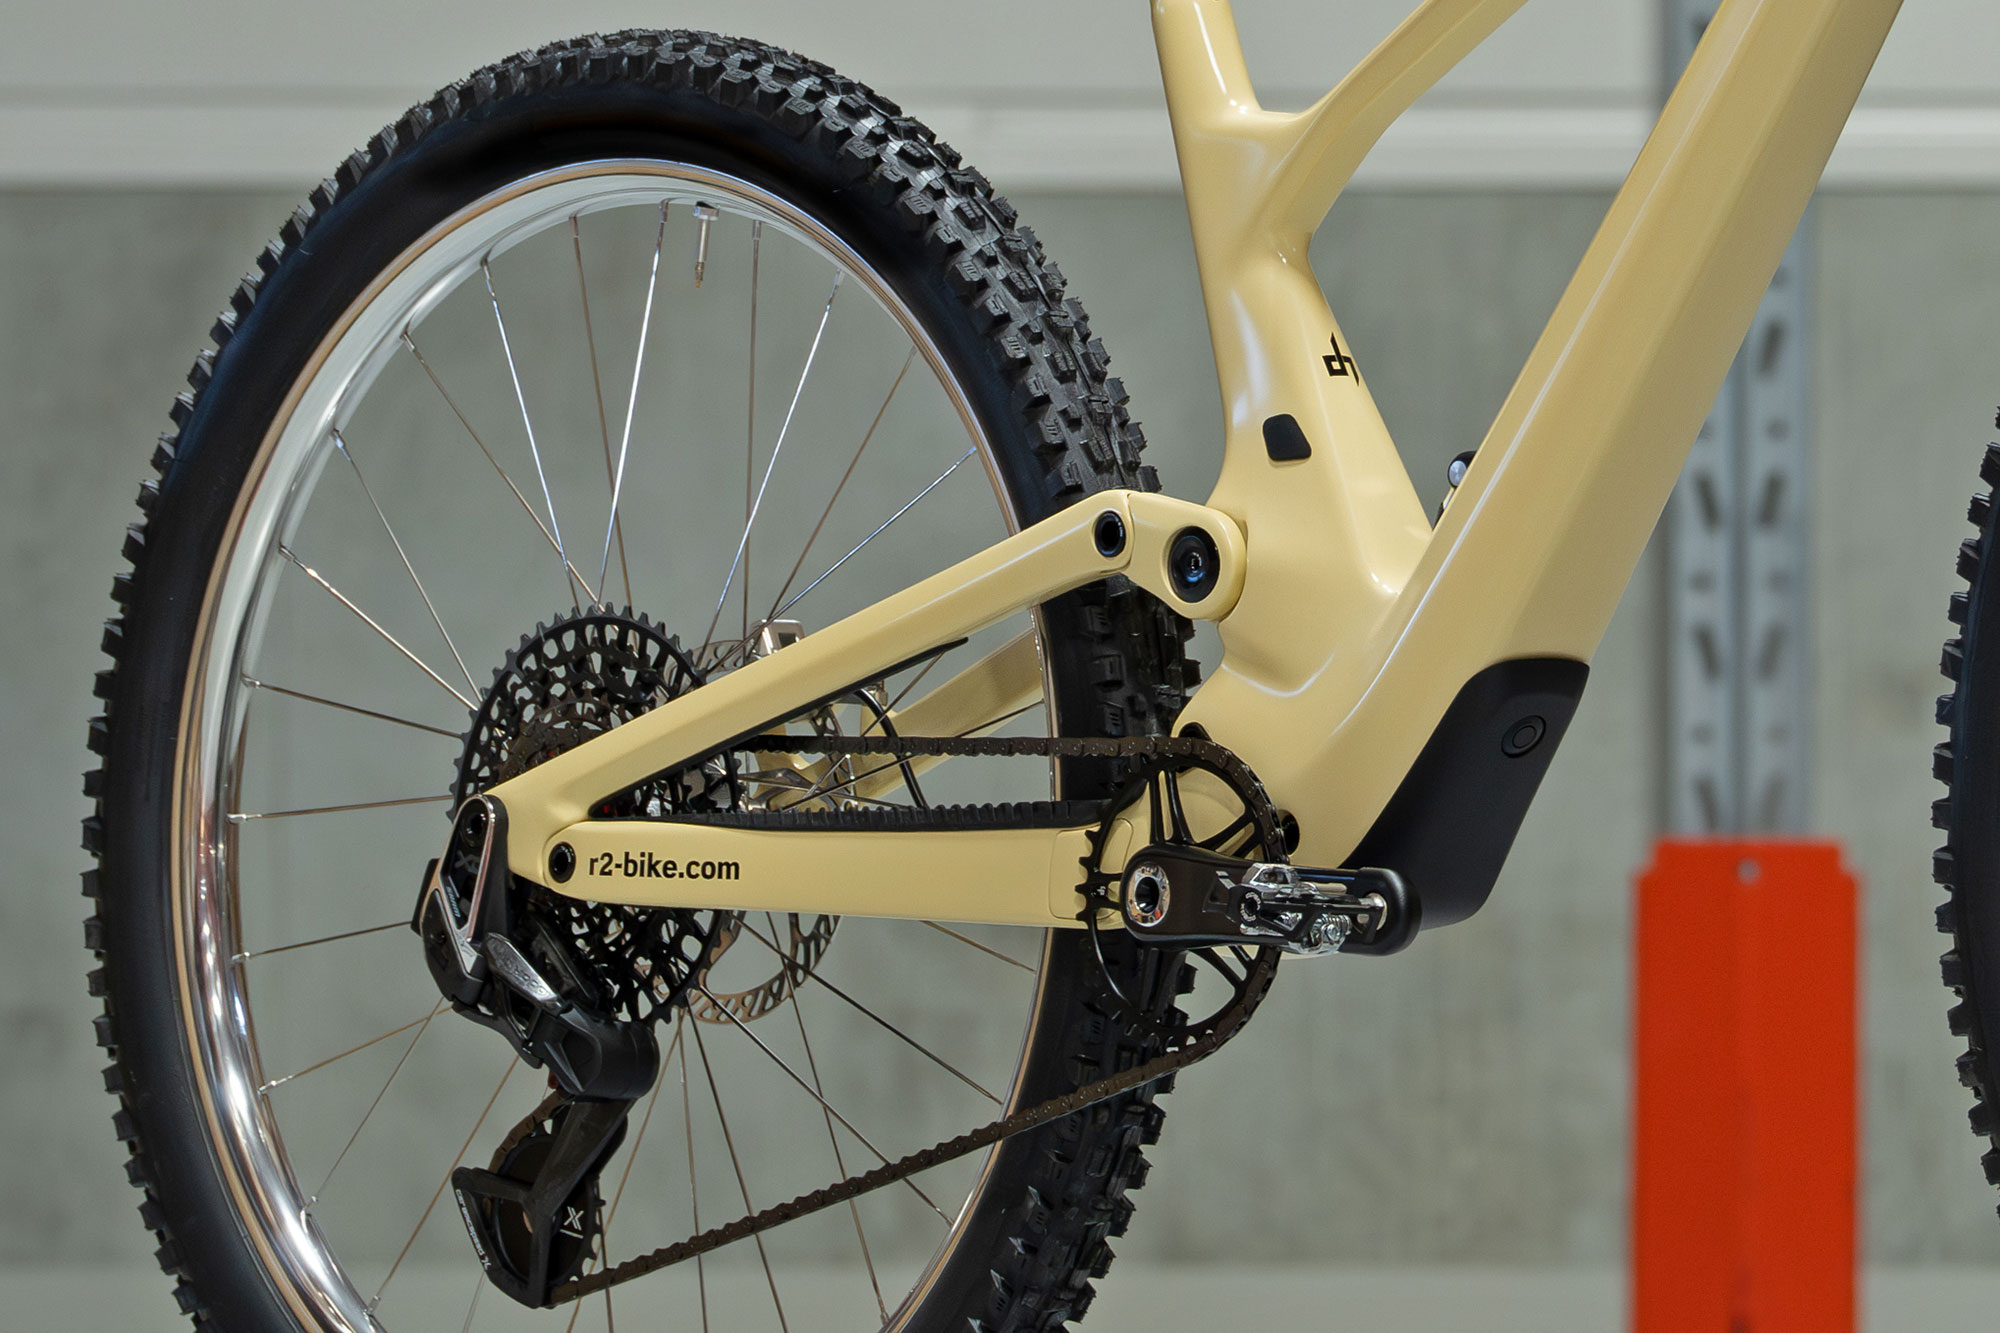 Dangerholm Scott Genius ST custom all-mountain bike of the future project, rear end details